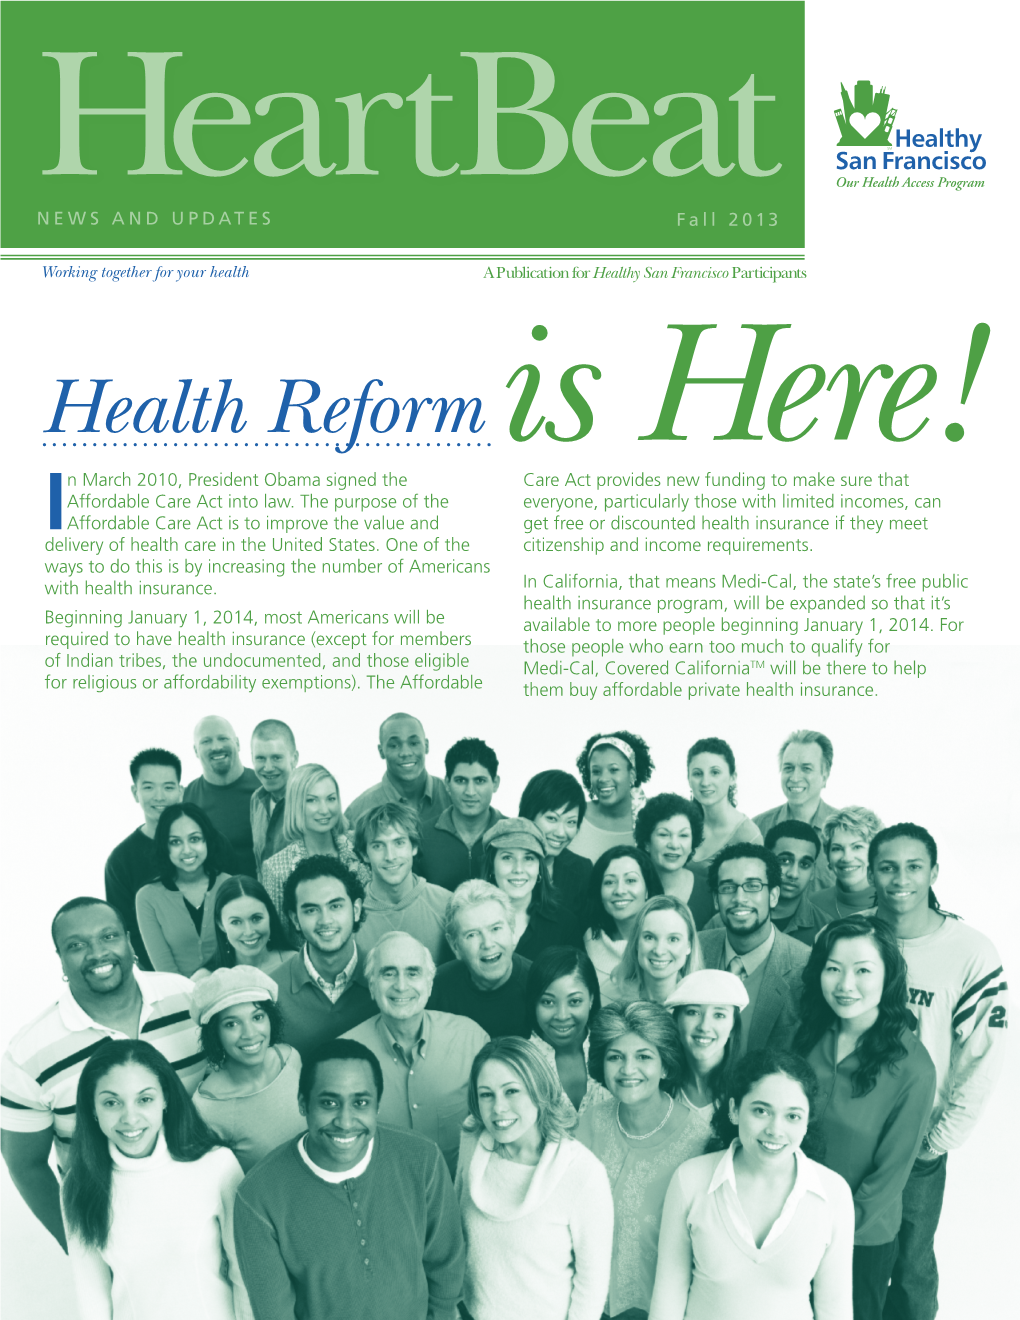 Health Reformis Here!